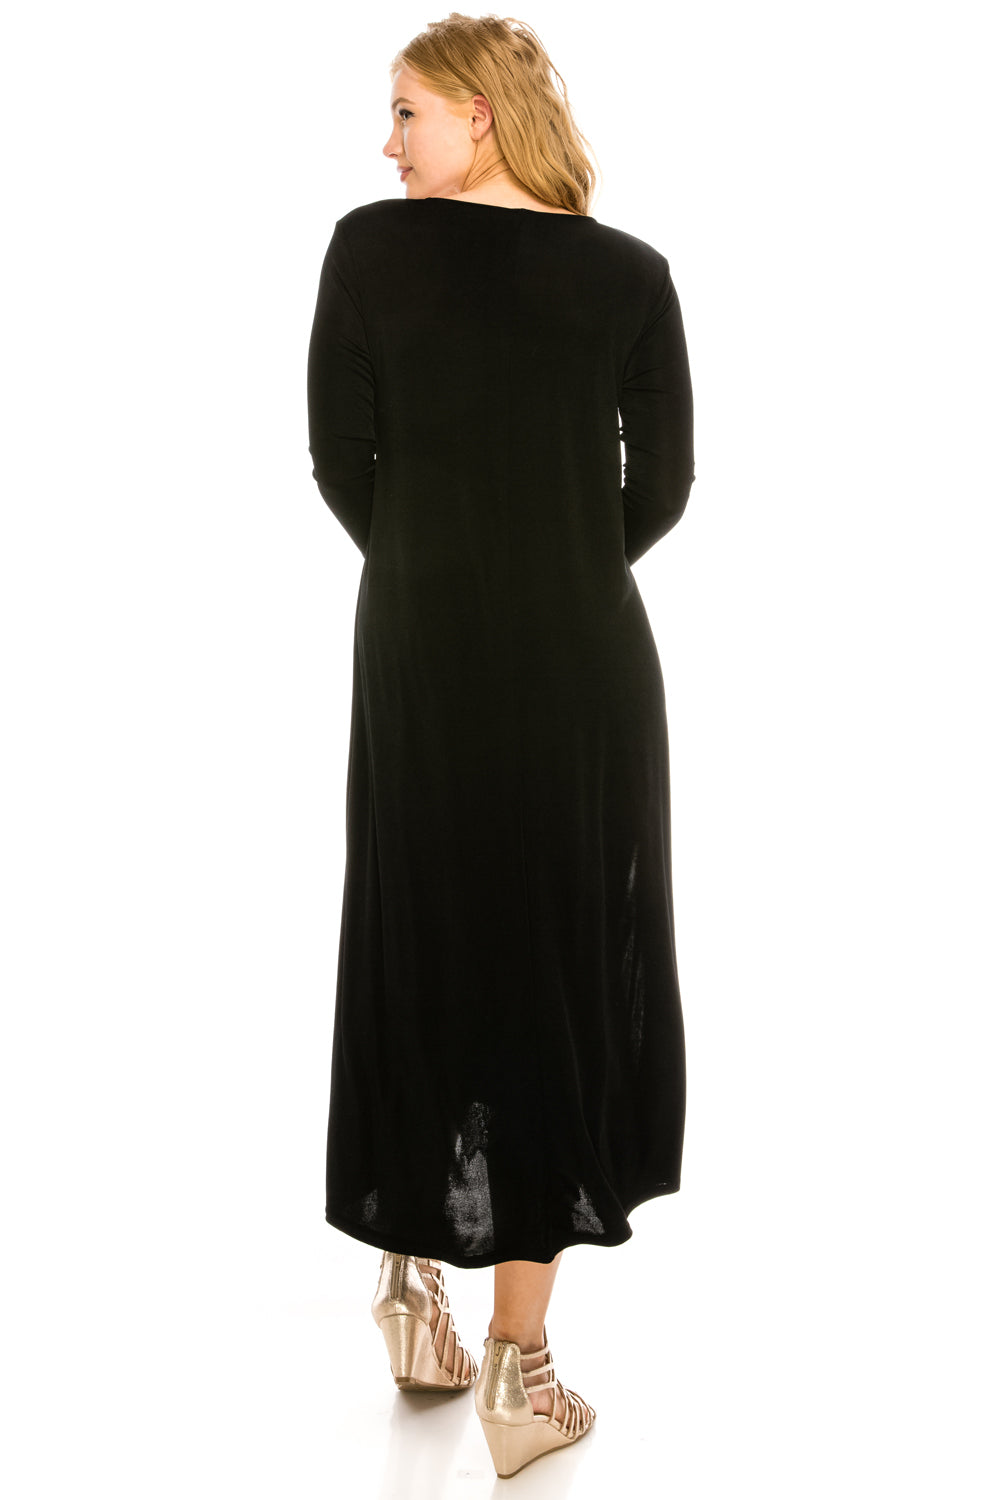 Plus Size Stretchy Quarter Sleeve Long Dress- 7002BN-QXS1 - Jostar Online